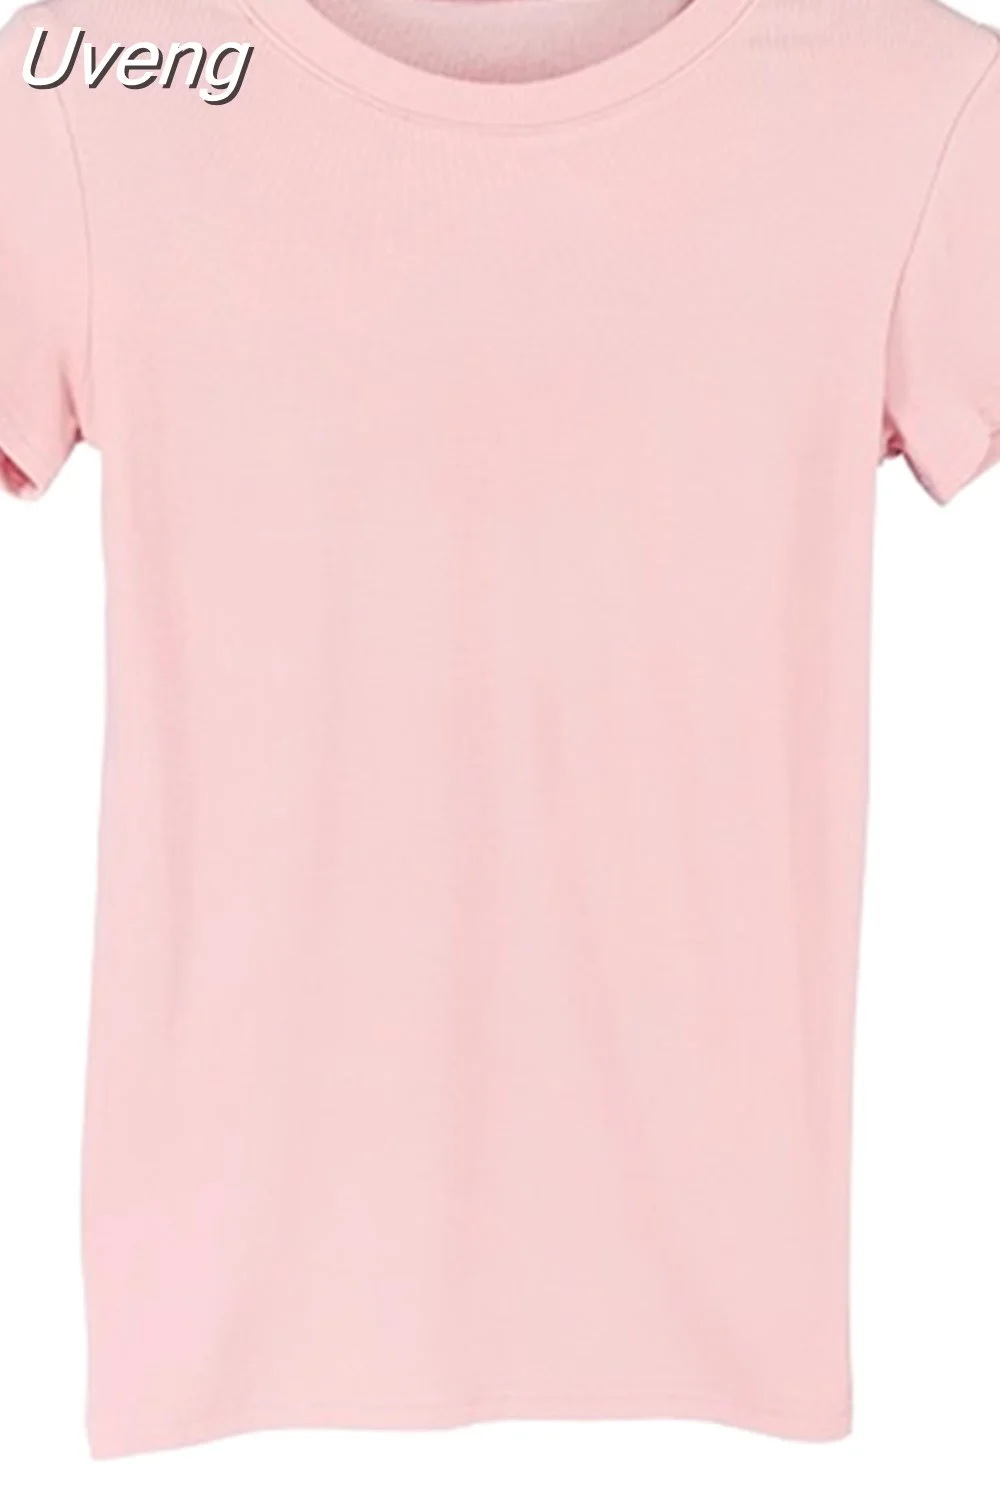 Uveng Summer Solid Cotton Women T-Shirts Fashion Slim Short Sleeve Female T Shirt Tops Korean Women Casual Tee Shirt Femme 13961